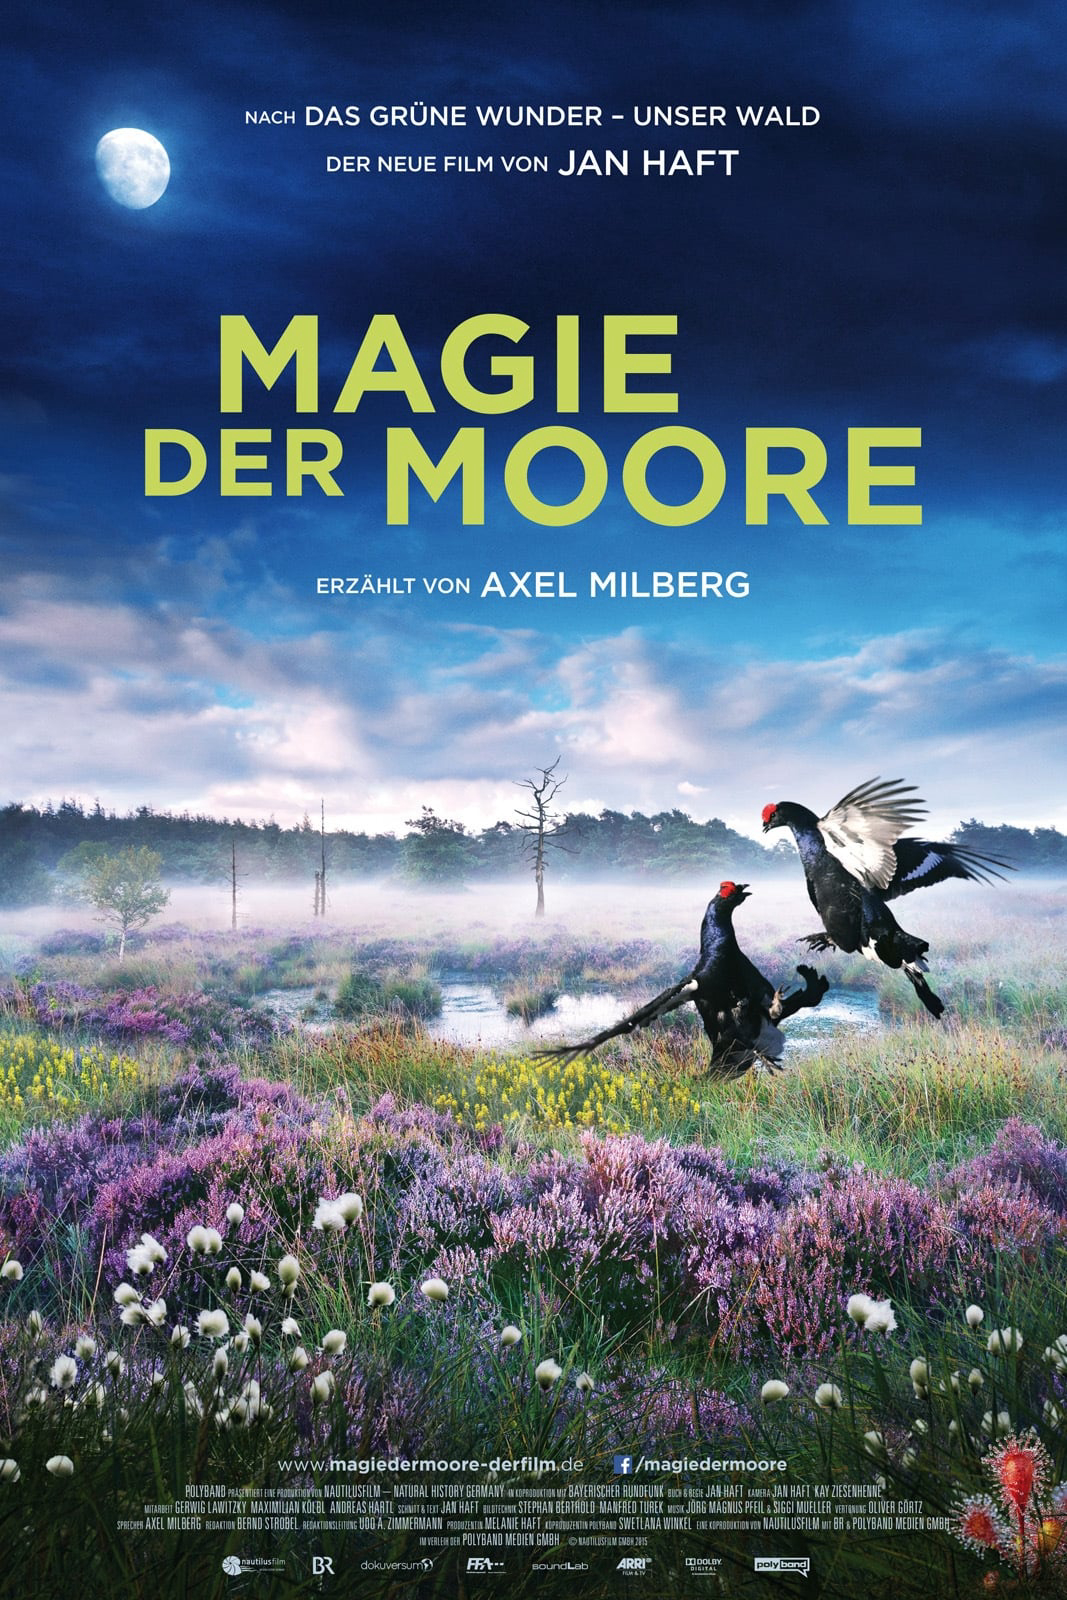 Magie der Moore (Magie der Moore) [2015]